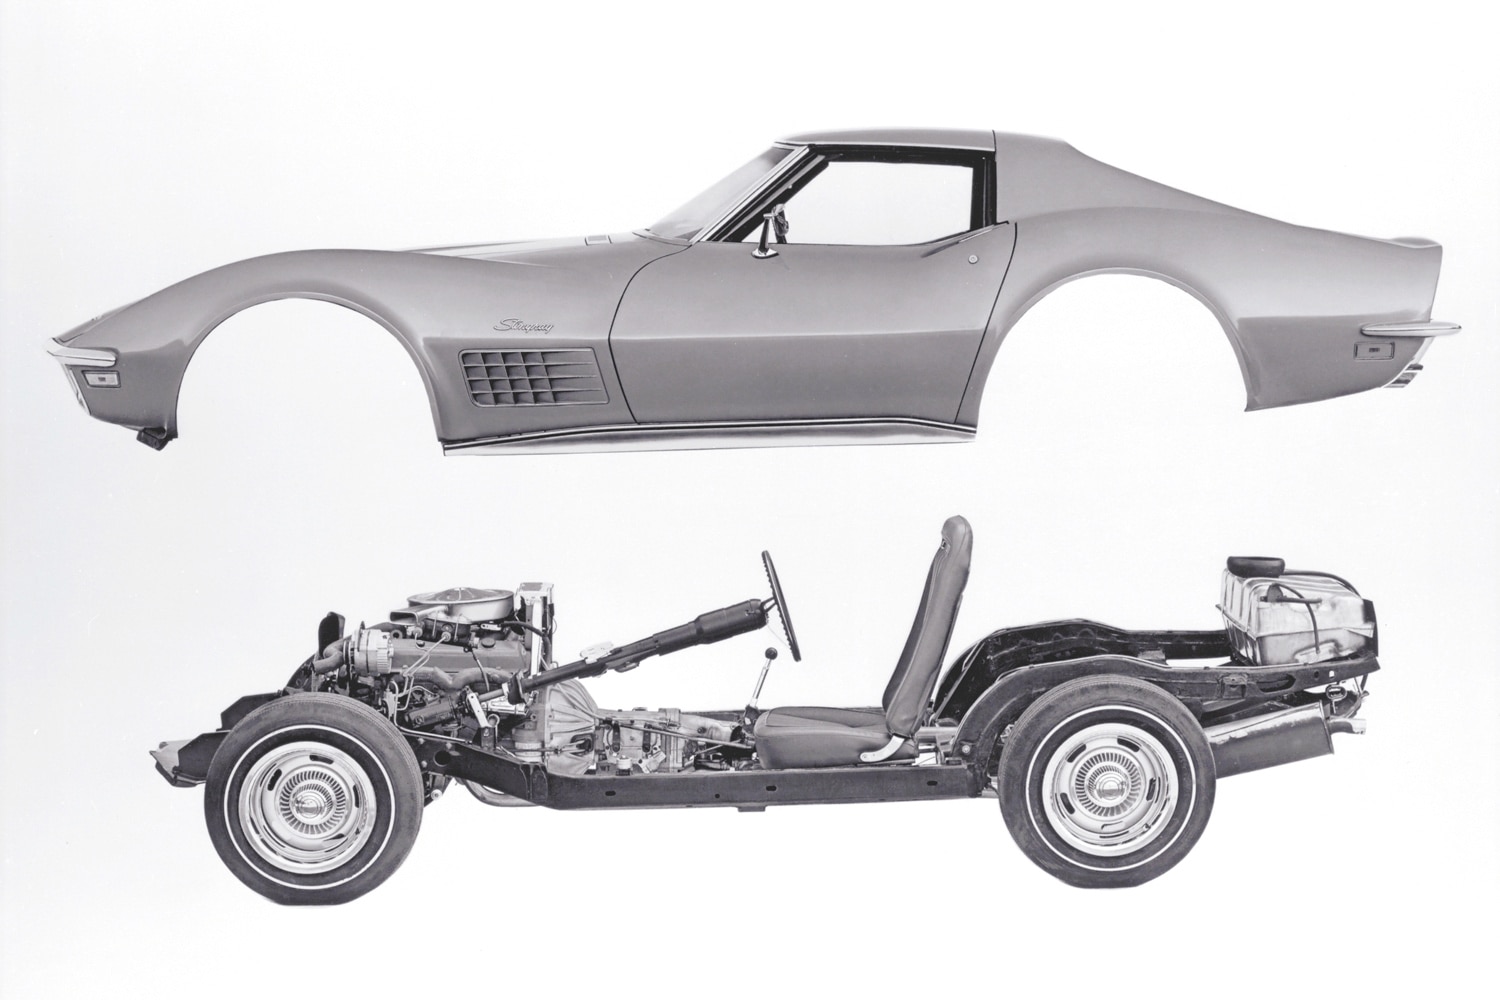 Corvette Stingray illustration showing the body apart from the frame